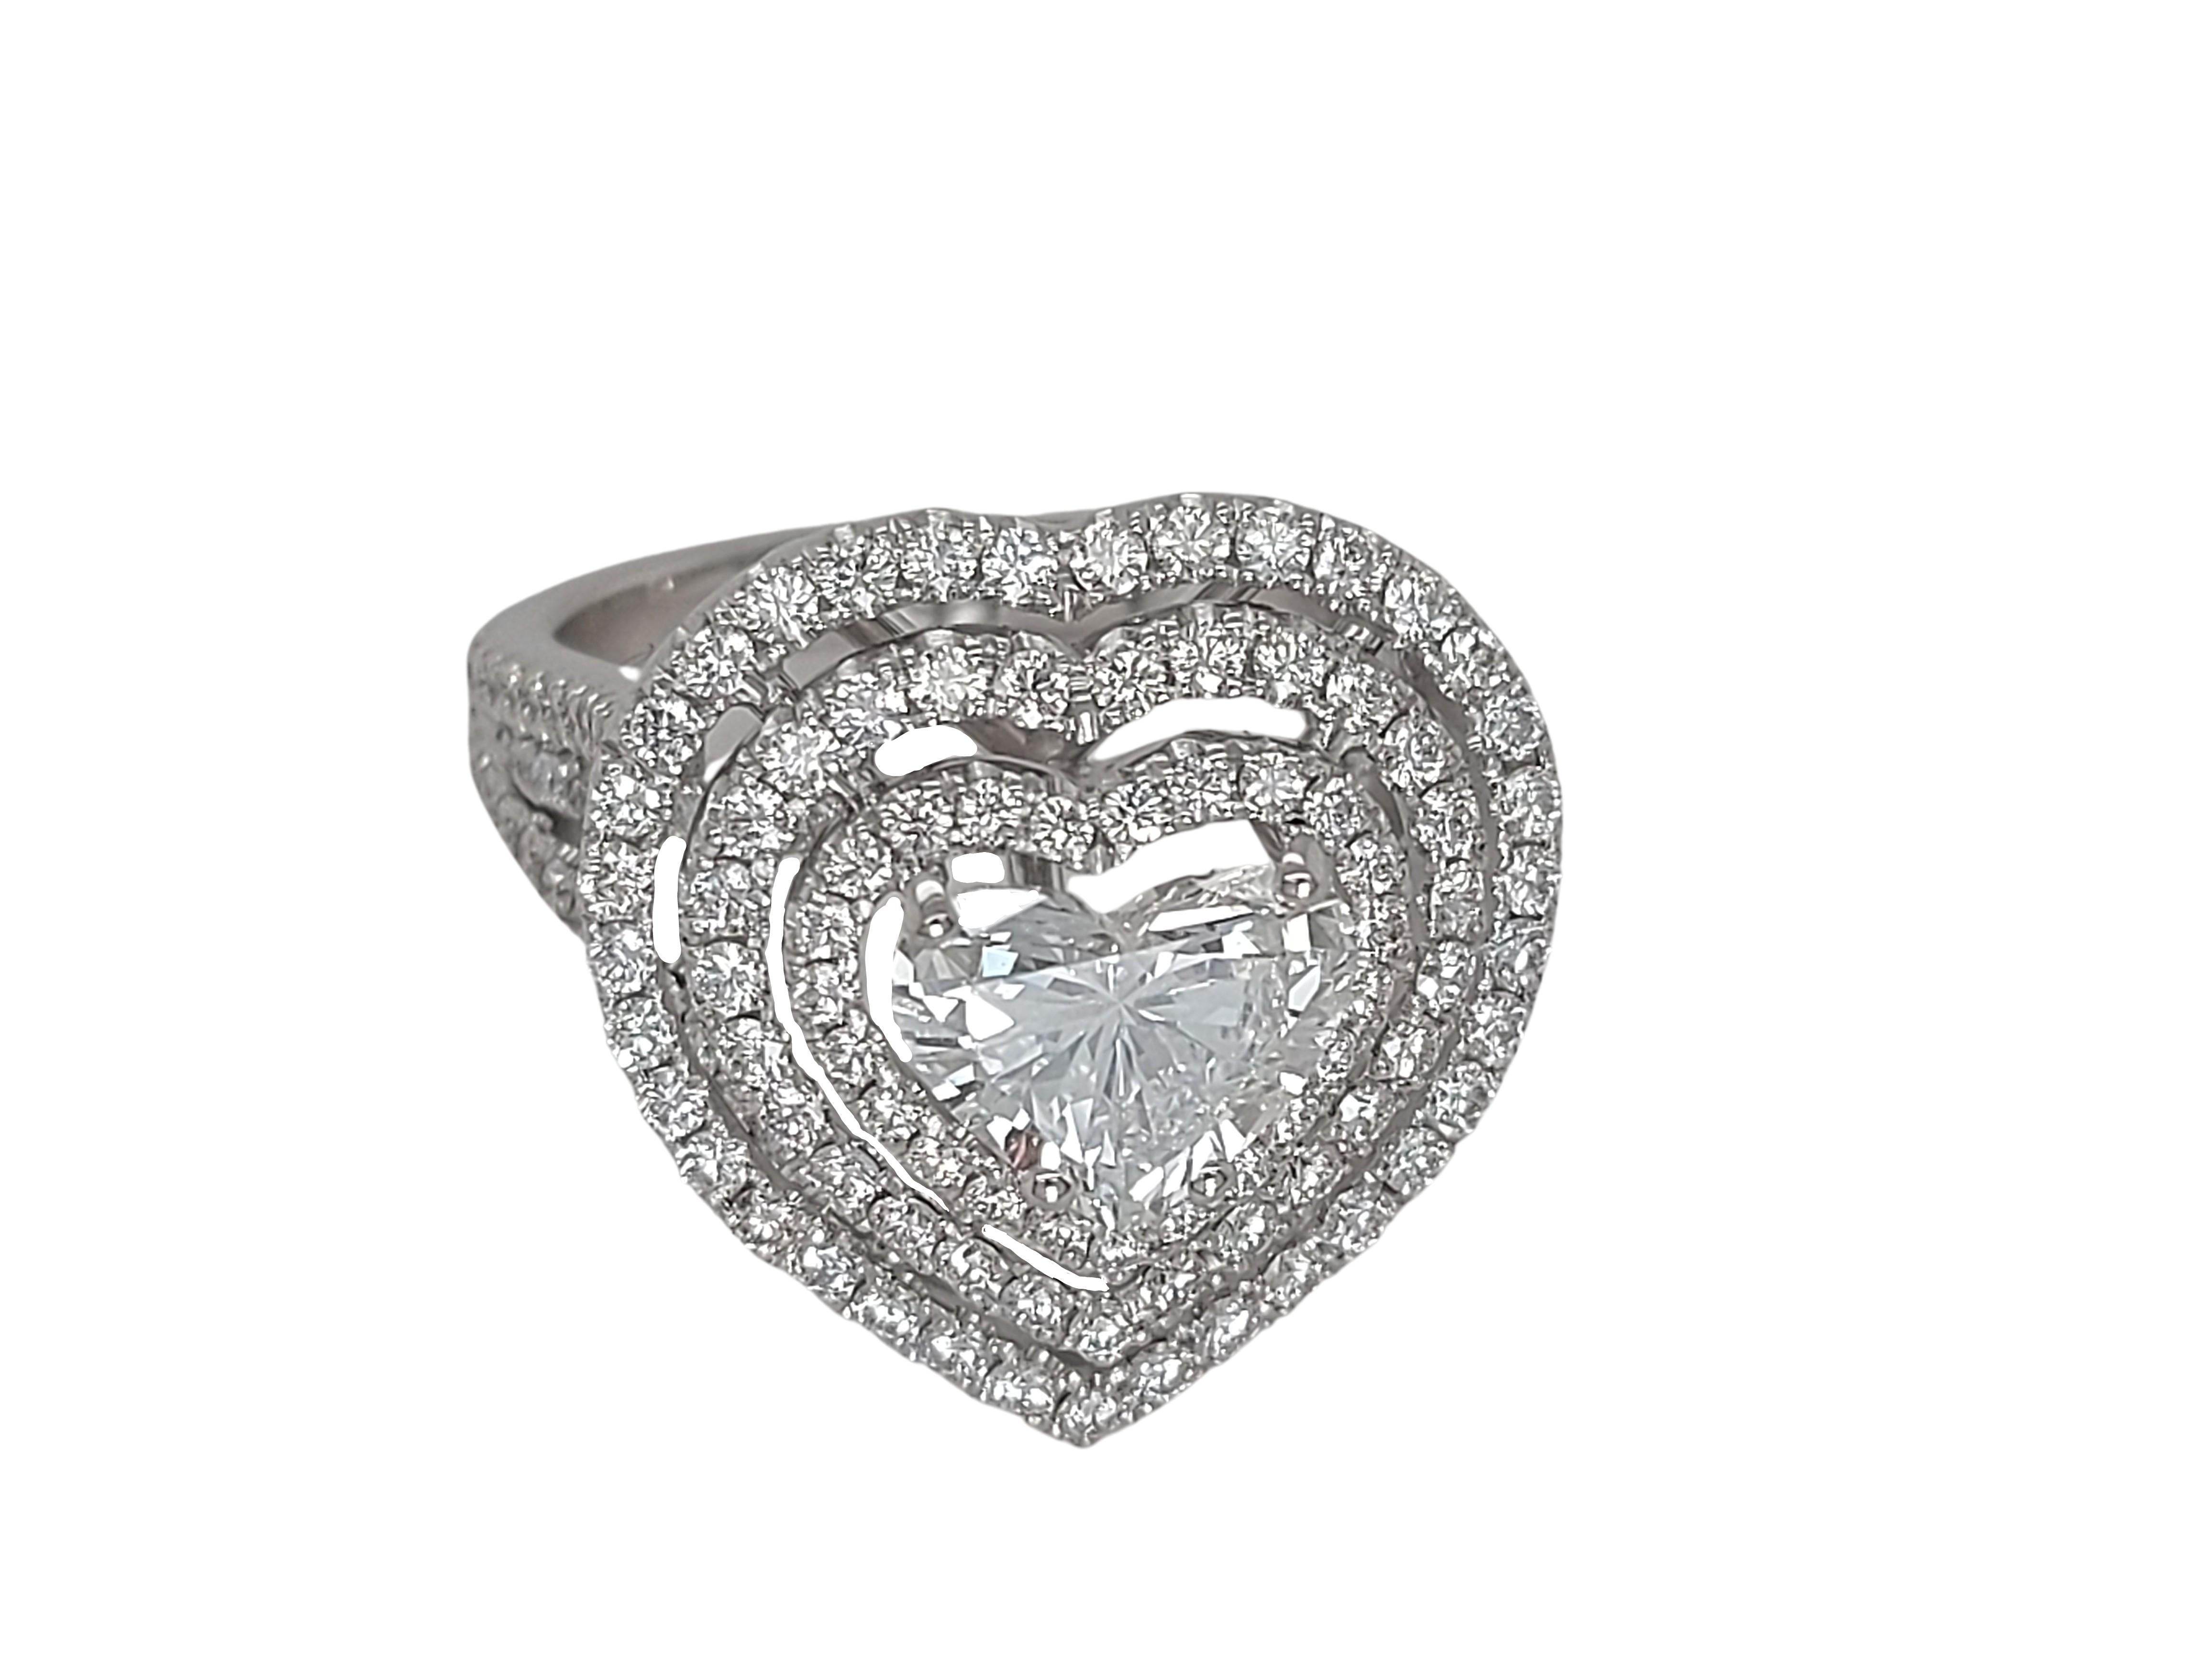 Heart Cut 18kt Gold Diamond Ring 1.50 Ct Heart Shaped Diamond & Brilliant Cut Diamonds For Sale